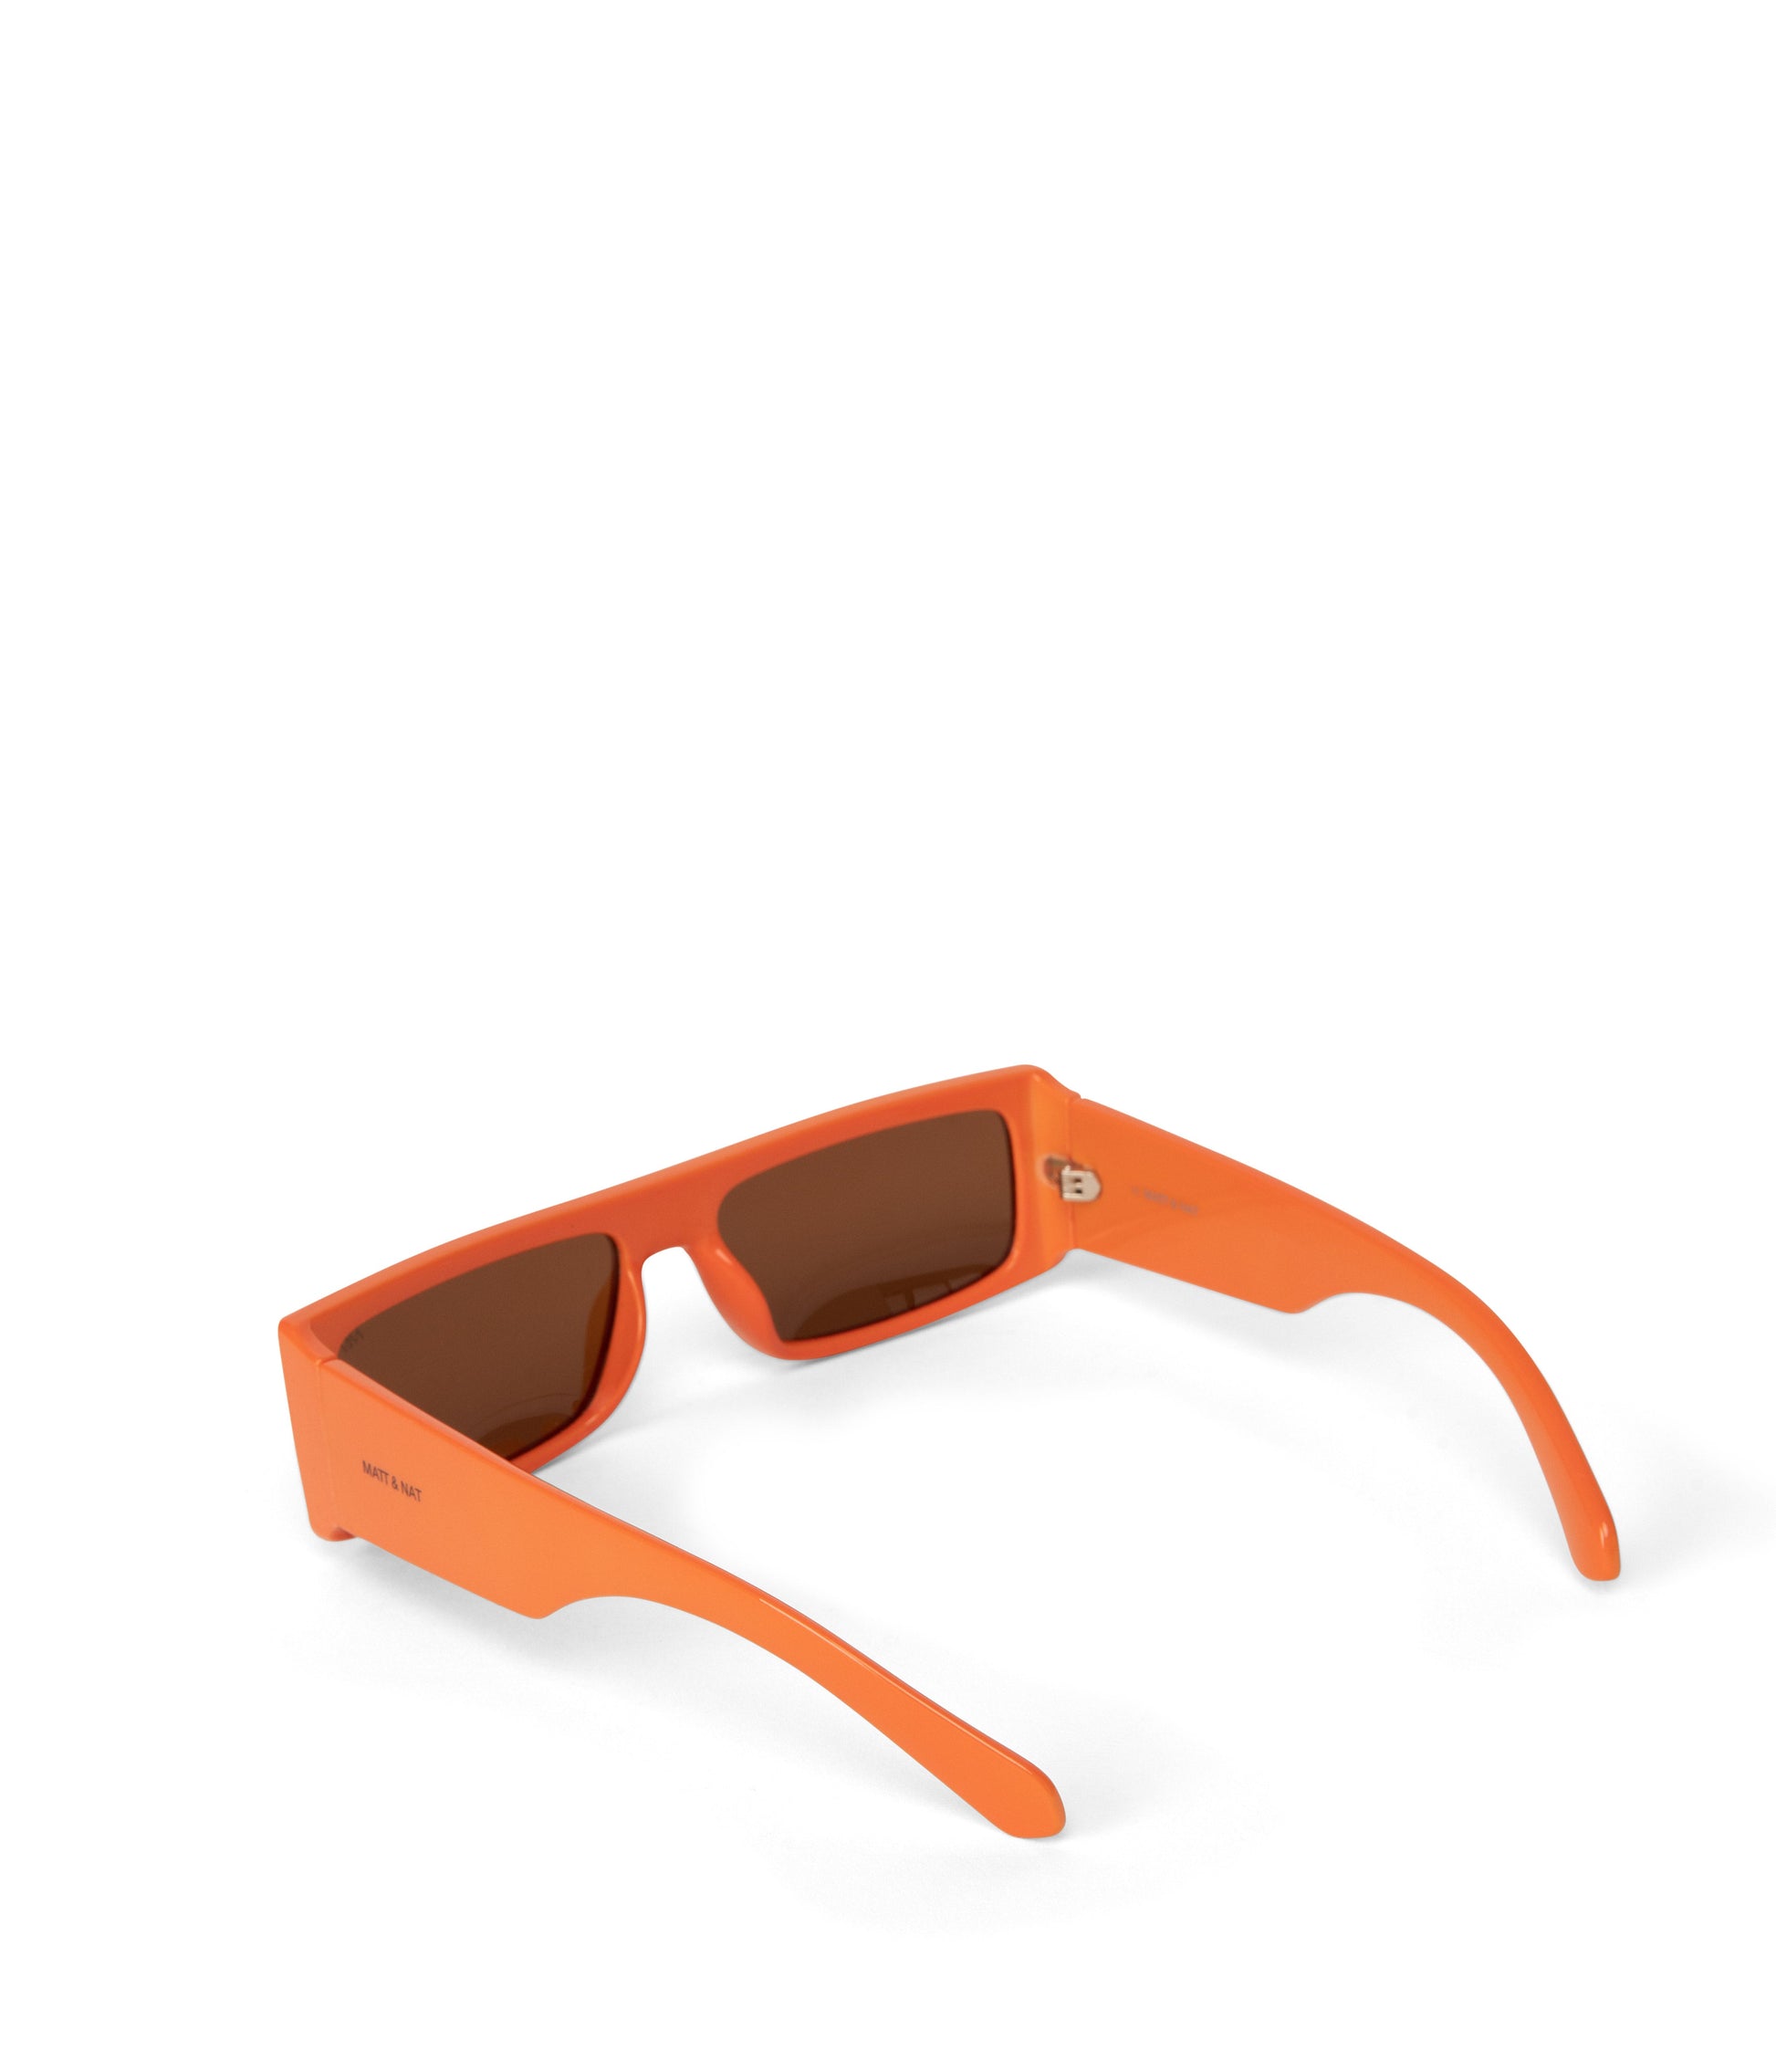 SAWAI-2 Recycled Rectangle Sunglasses | Color: Orange, Brown - variant::orange